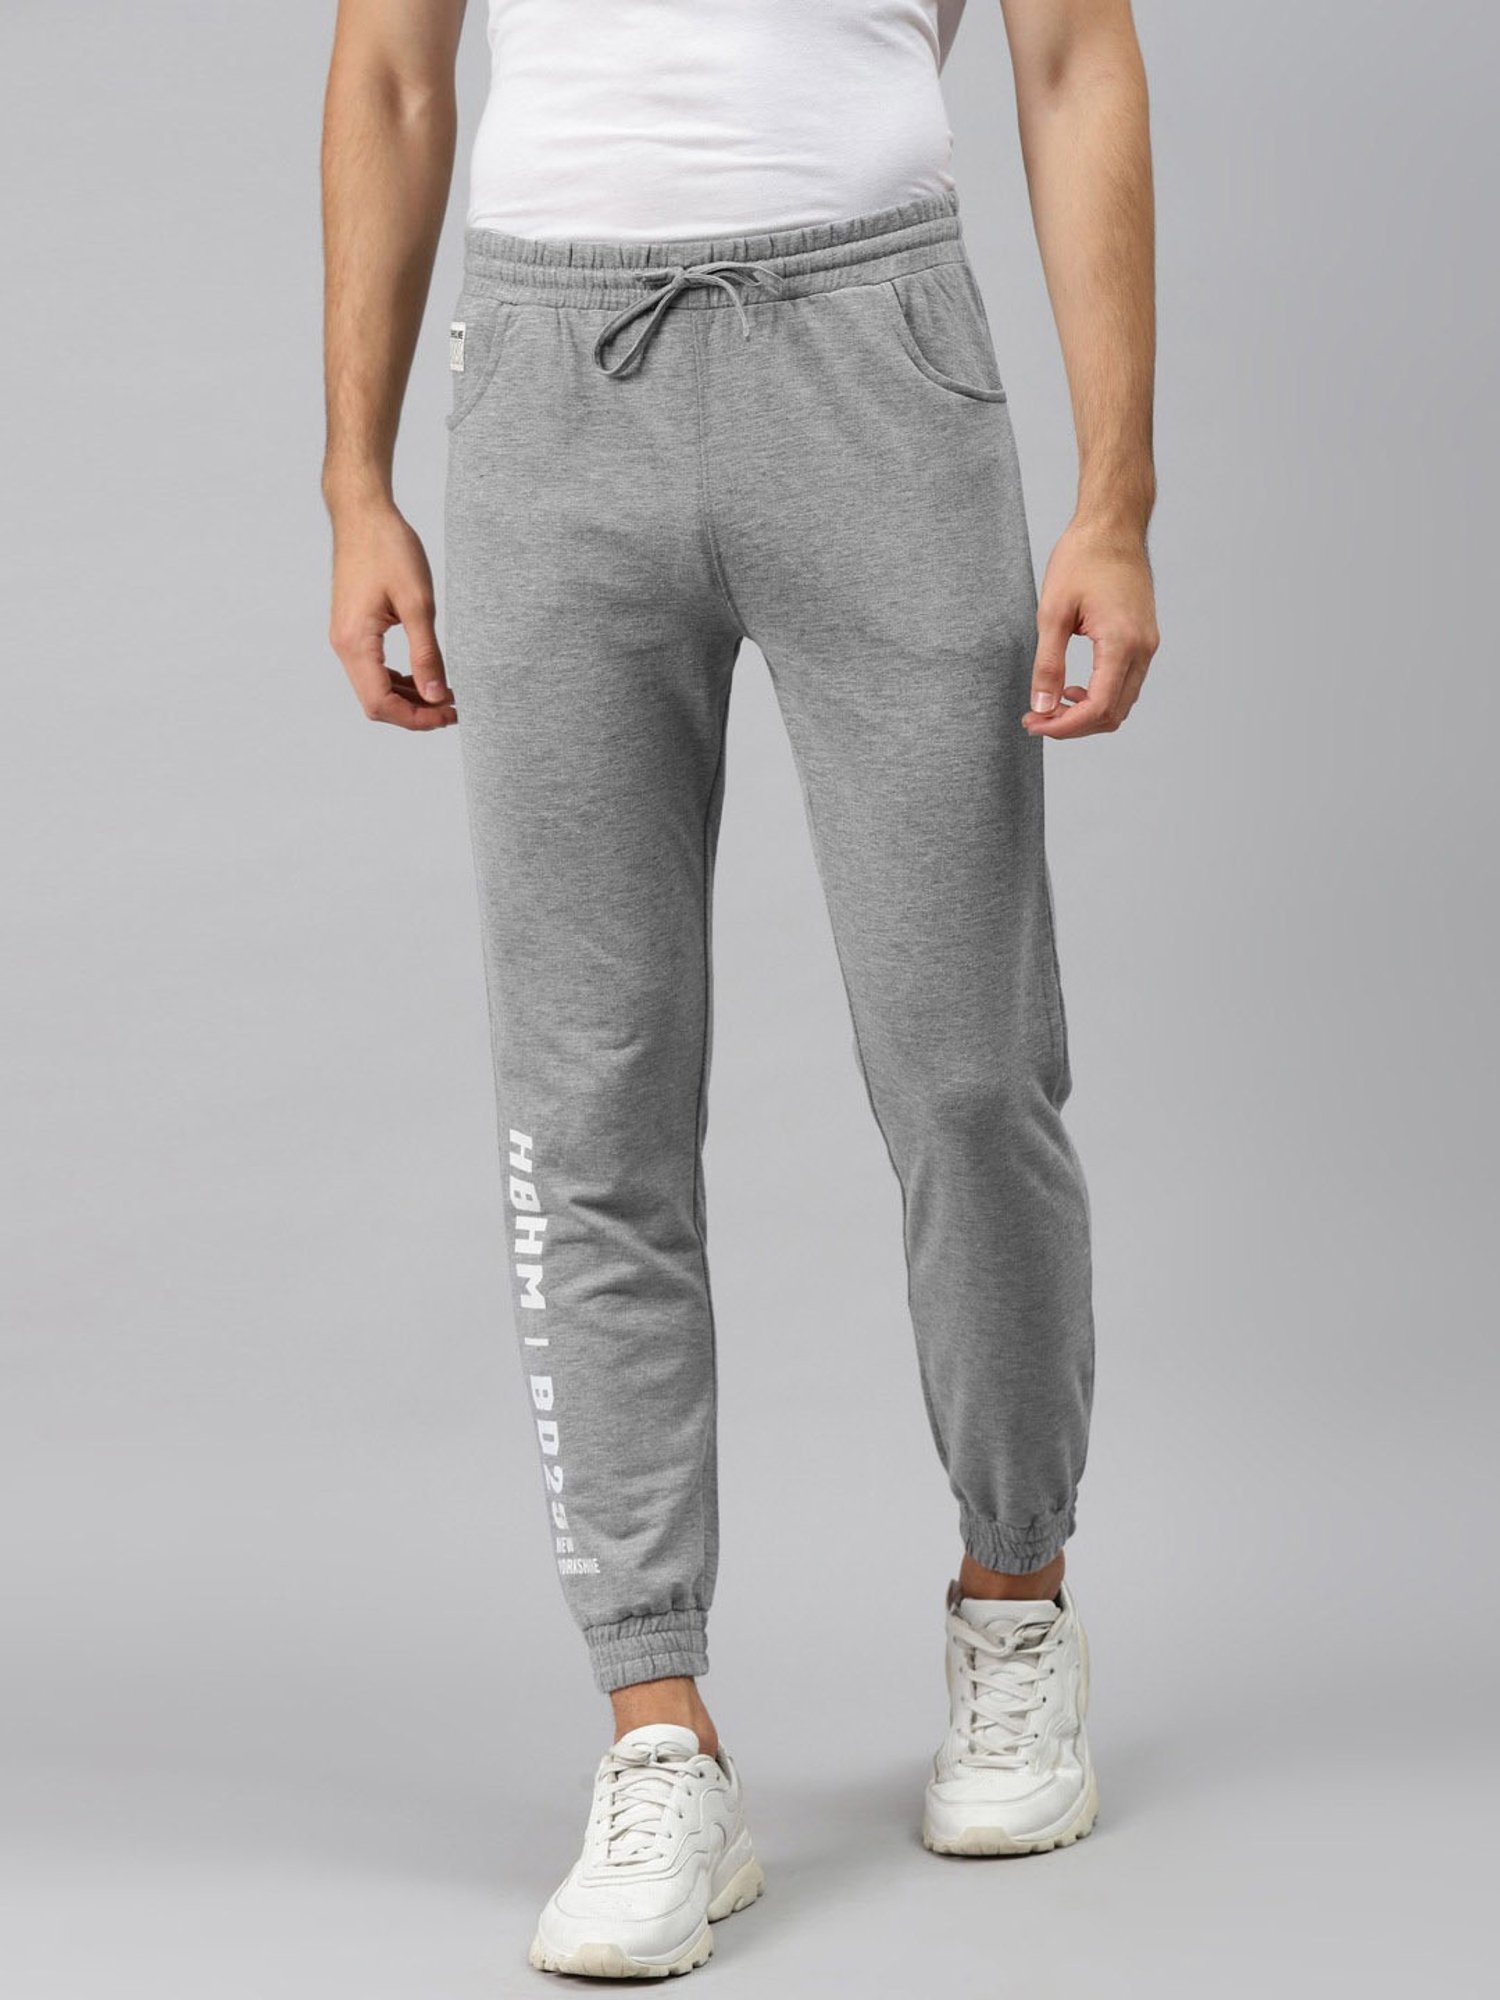 Hubberholme Men's Cotton Blend Slim Fit All Season Wear Track Pants (Slant  Stripe, Grey, 30) : Amazon.in: Clothing & Accessories